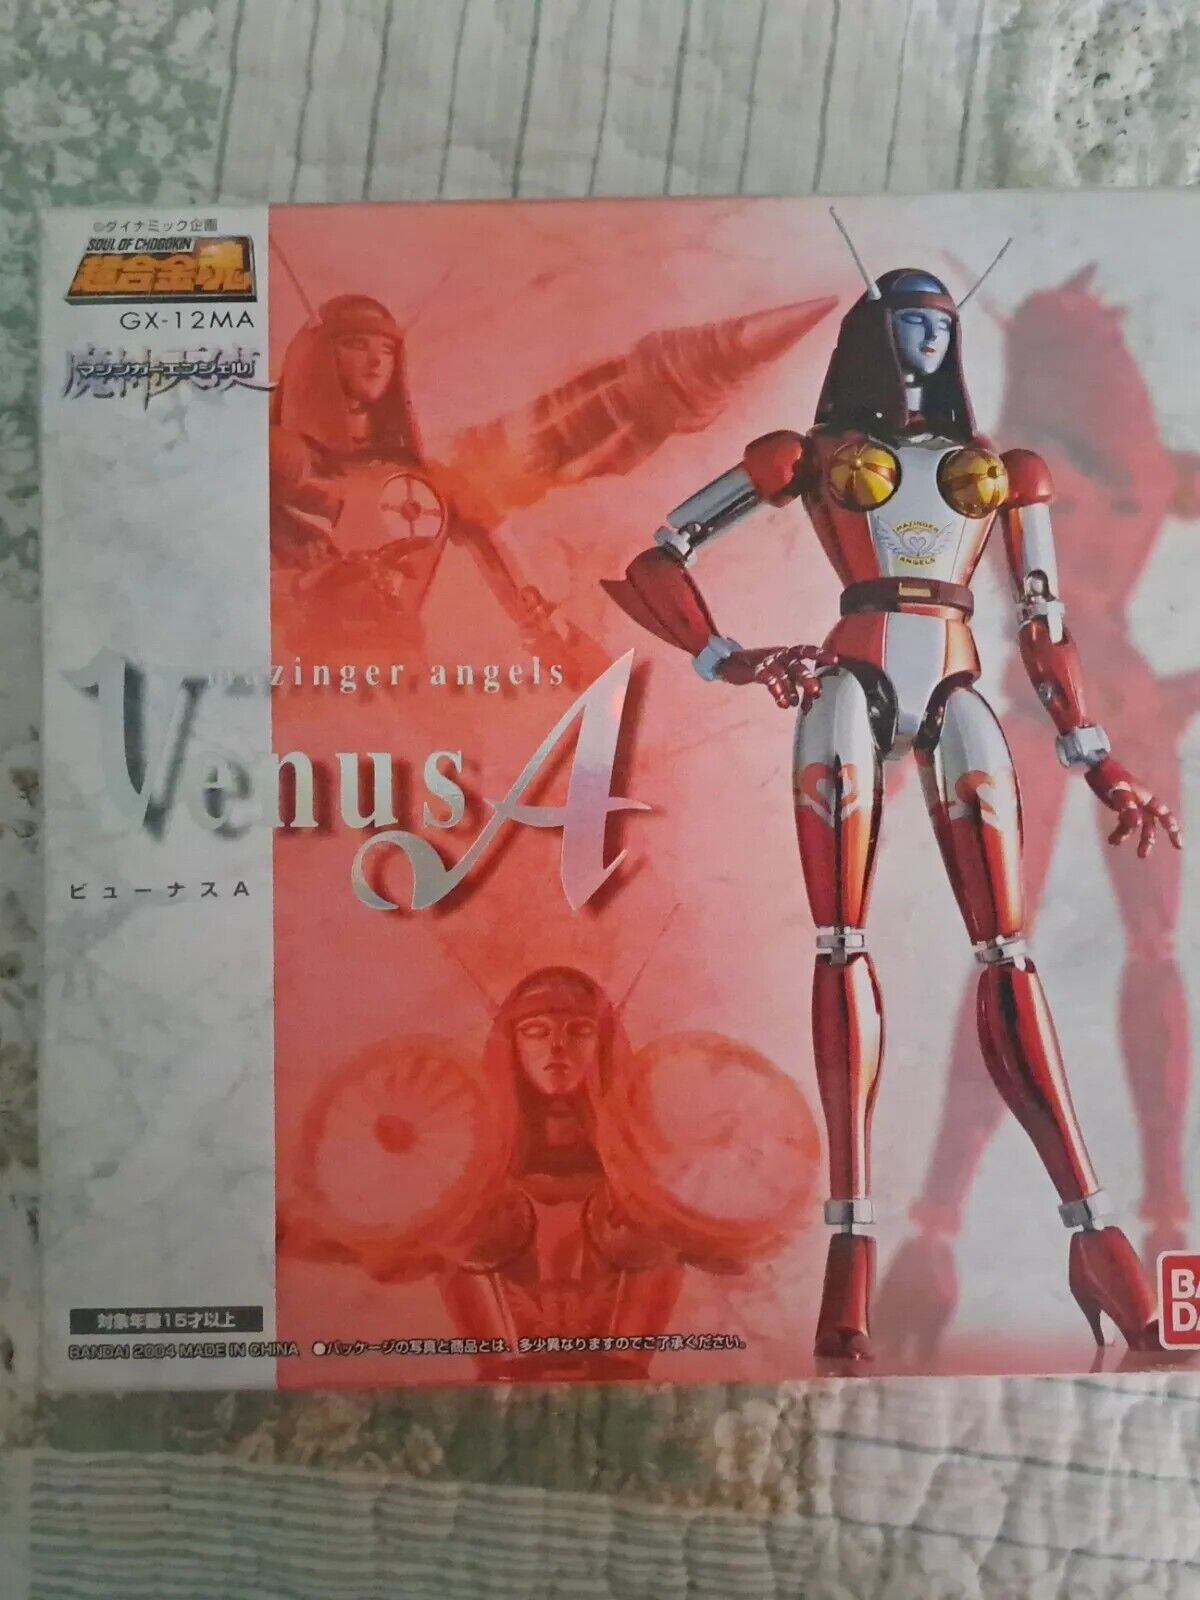 Bandai  GX-12MA Mazinger Angel Venus A Action Figure